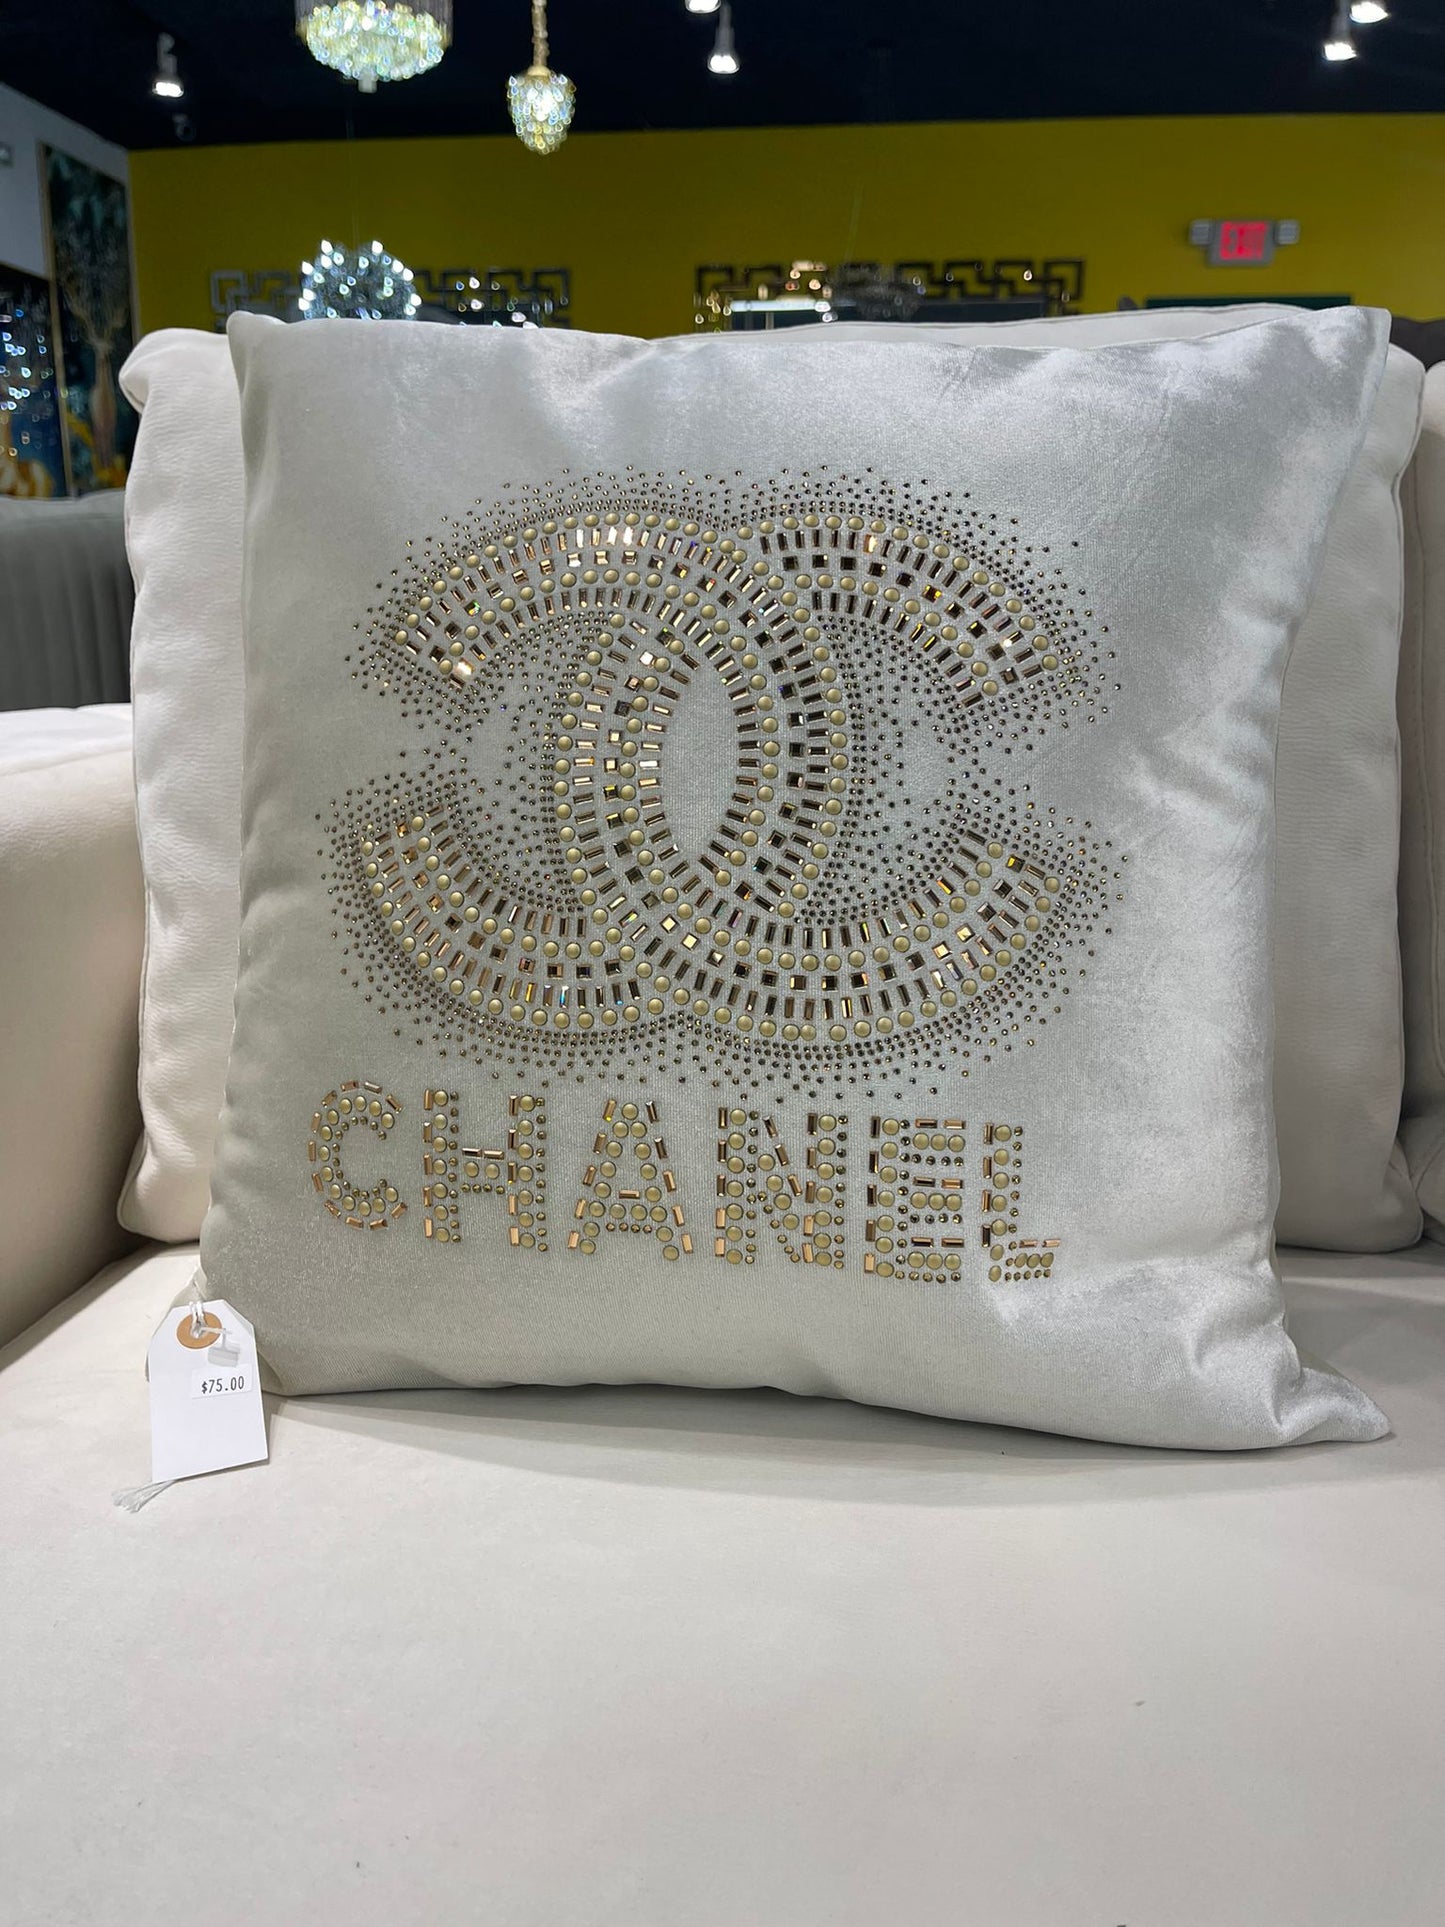 Chanel Paris Cream Luxury Brand Premium Bedding Set - Masteez